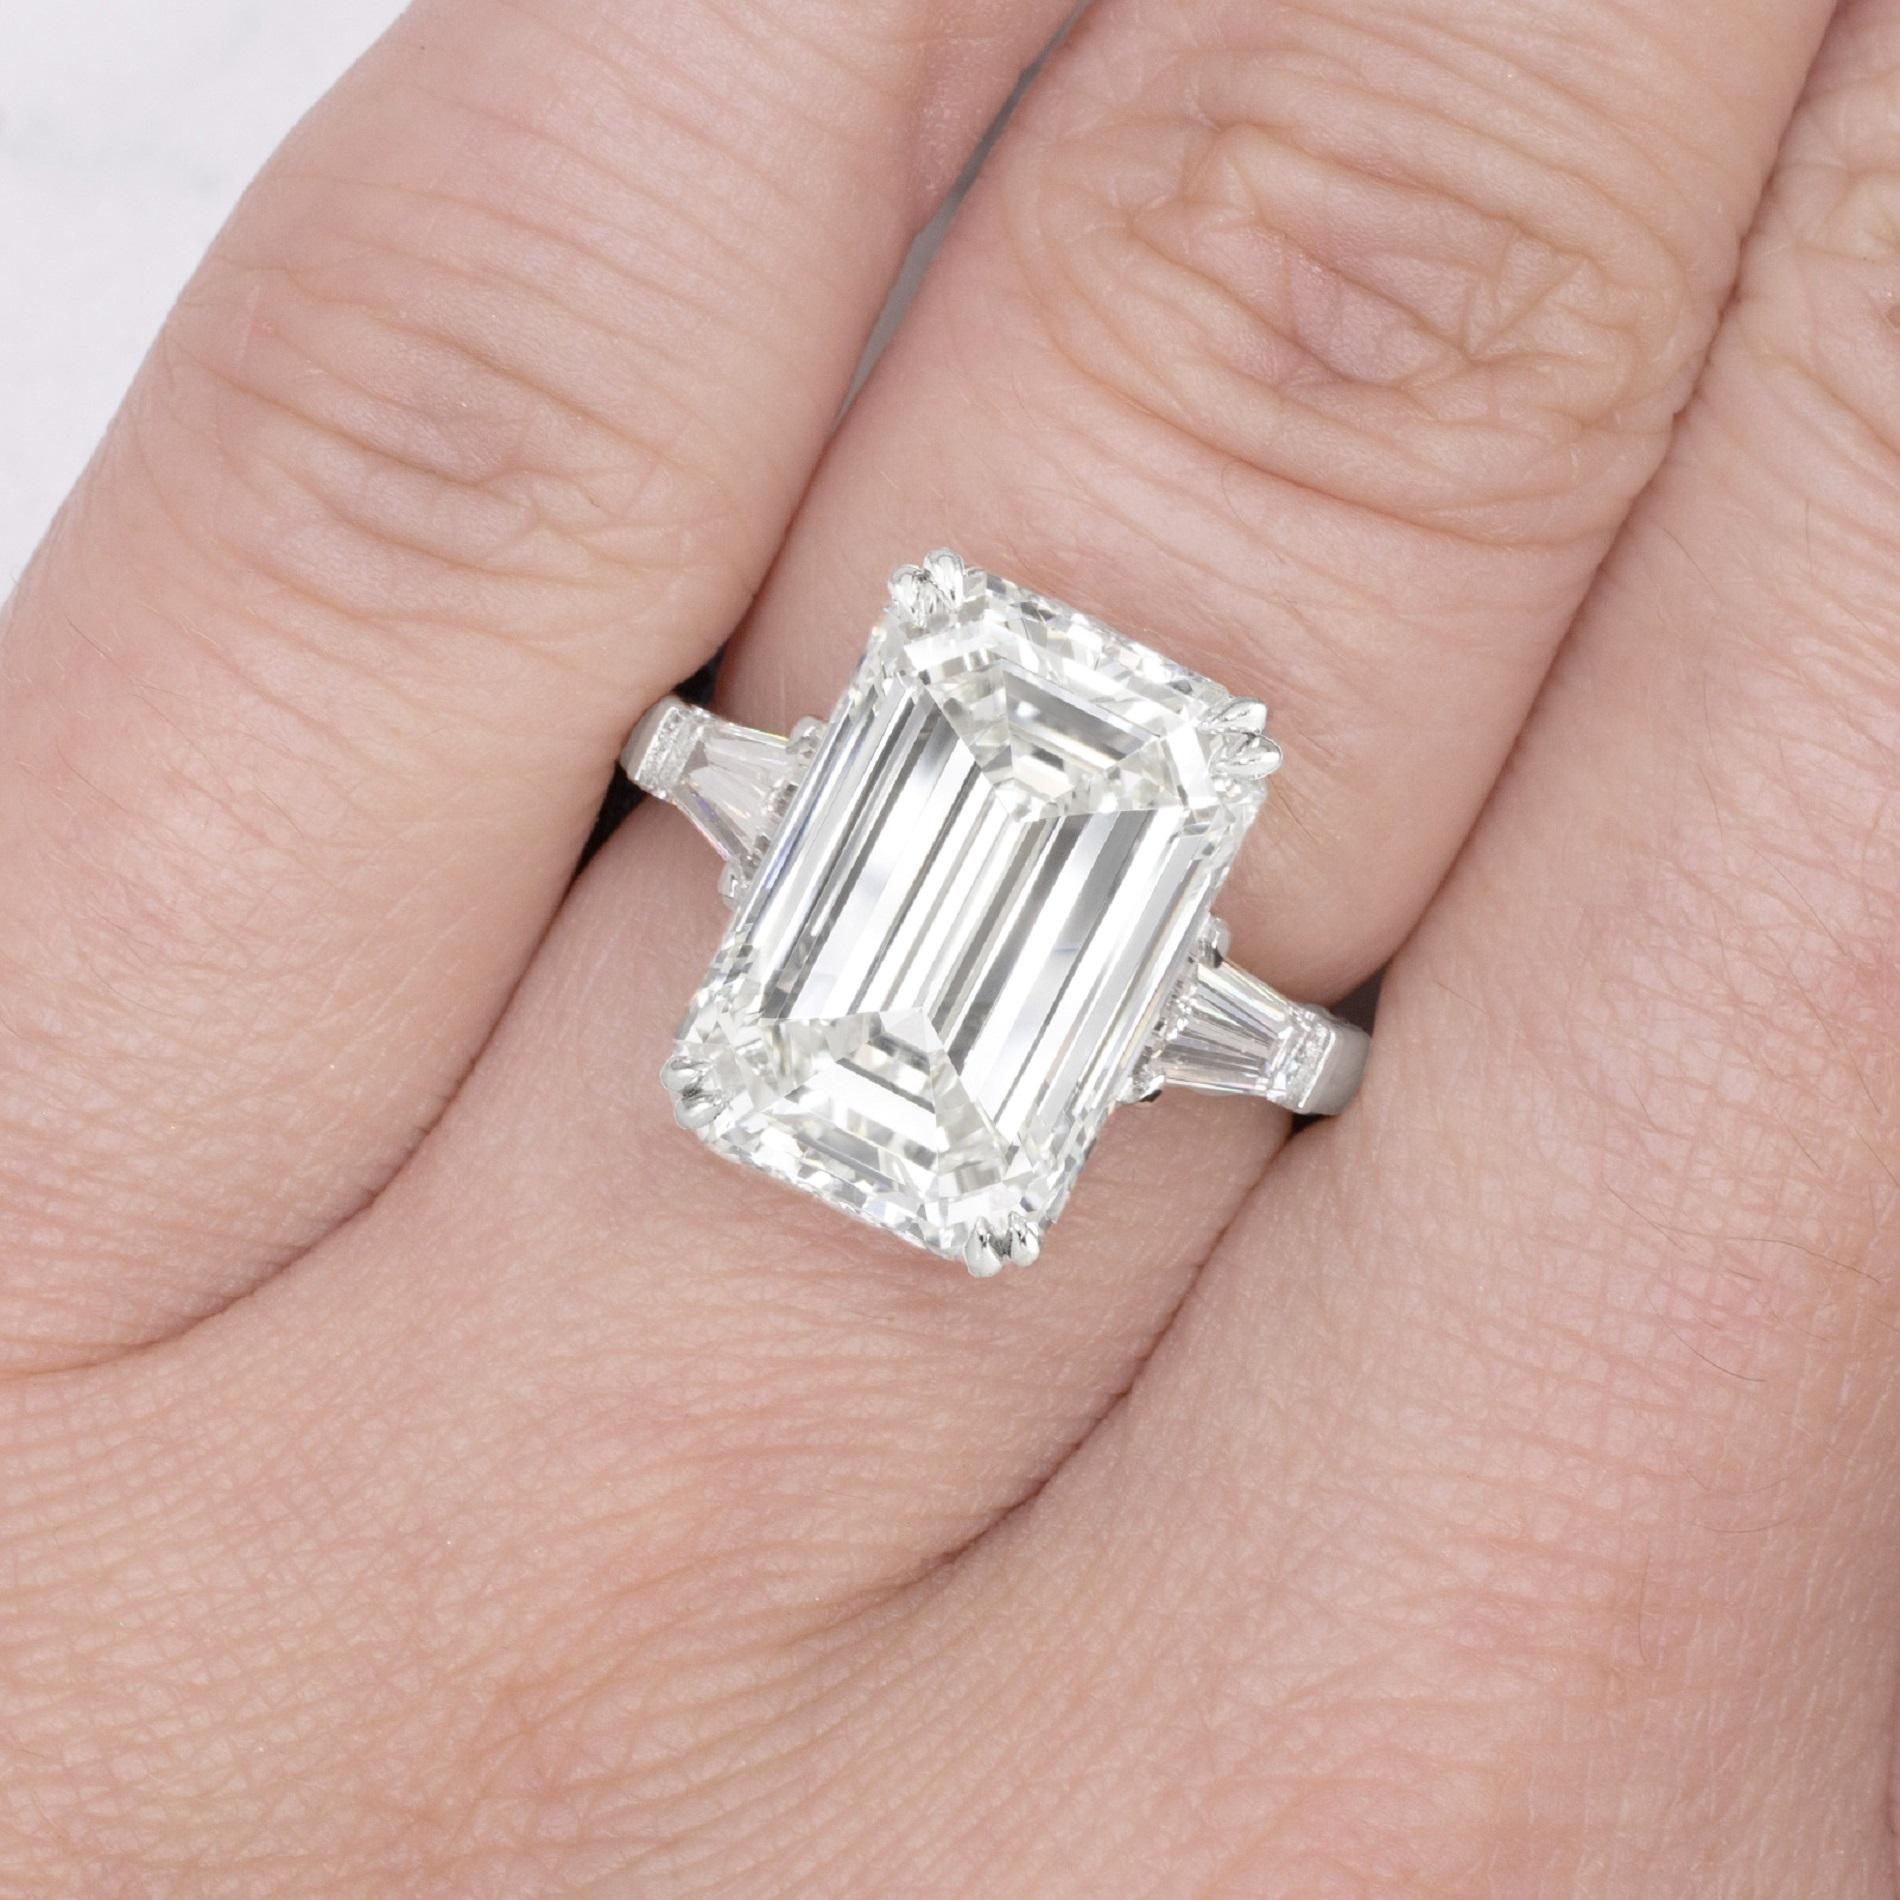 3 carat emerald cut natural diamond ring